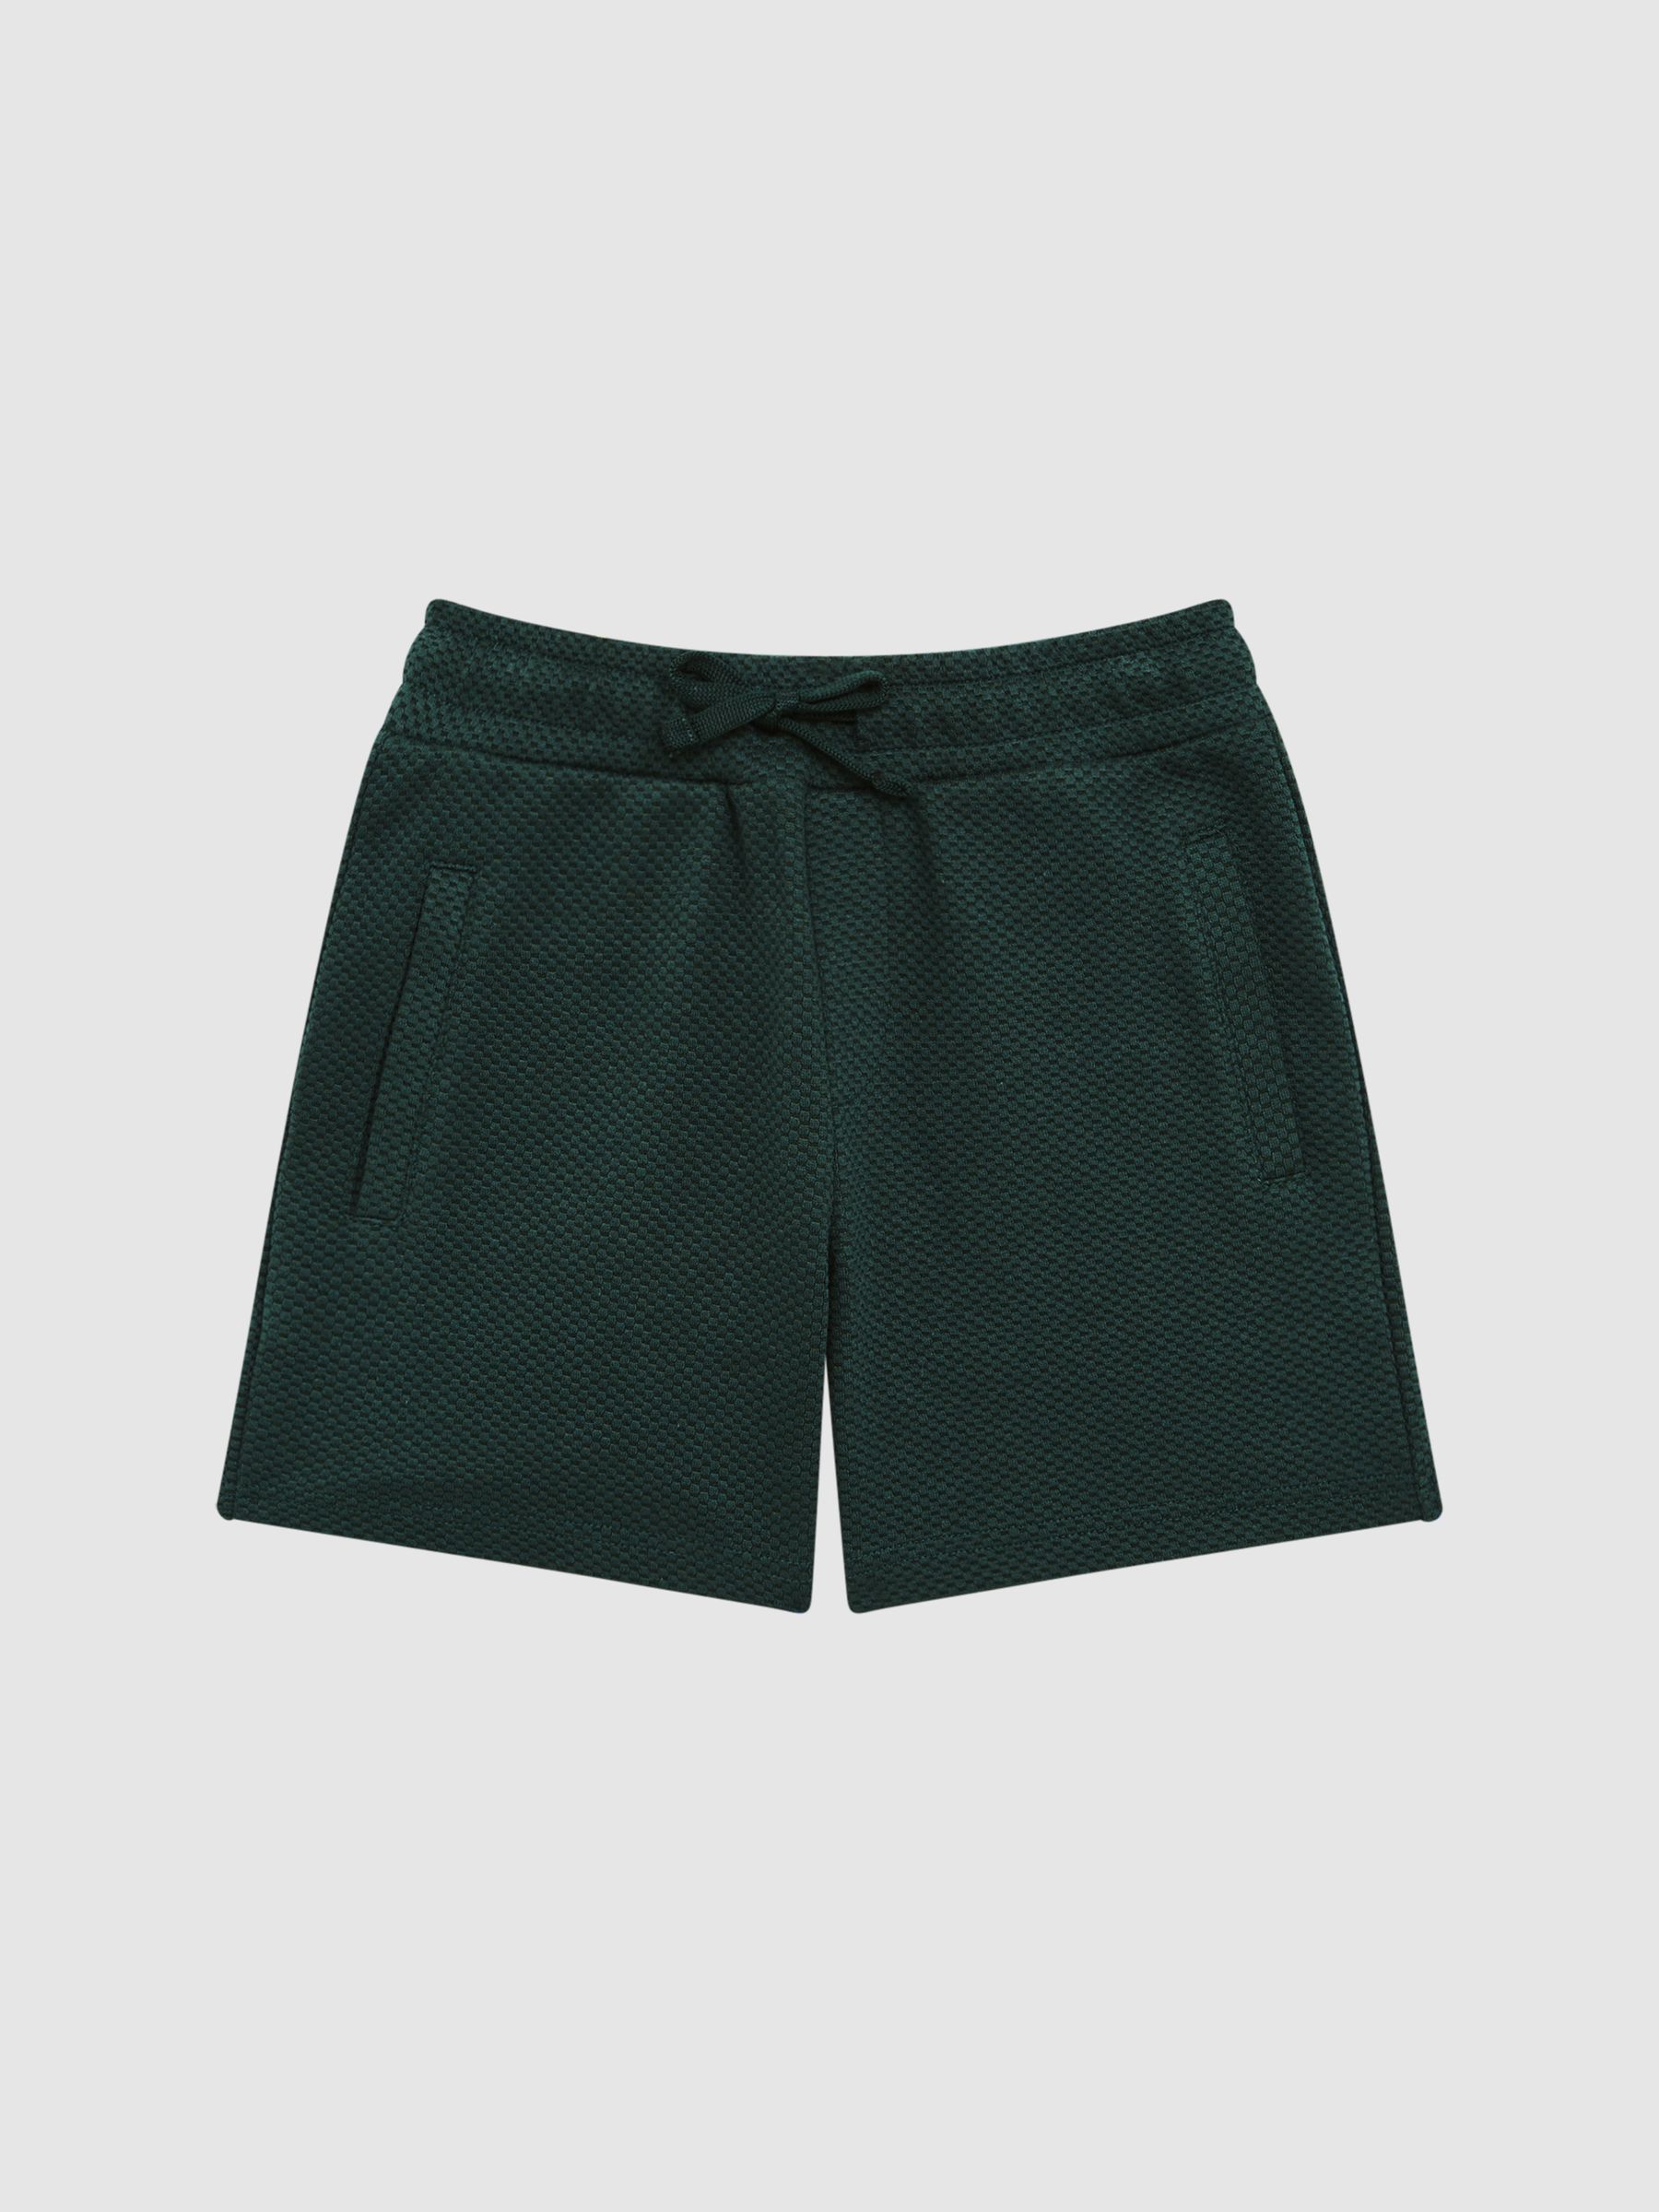 Reiss Robin Slim Fit Textured Drawstring Shorts - REISS